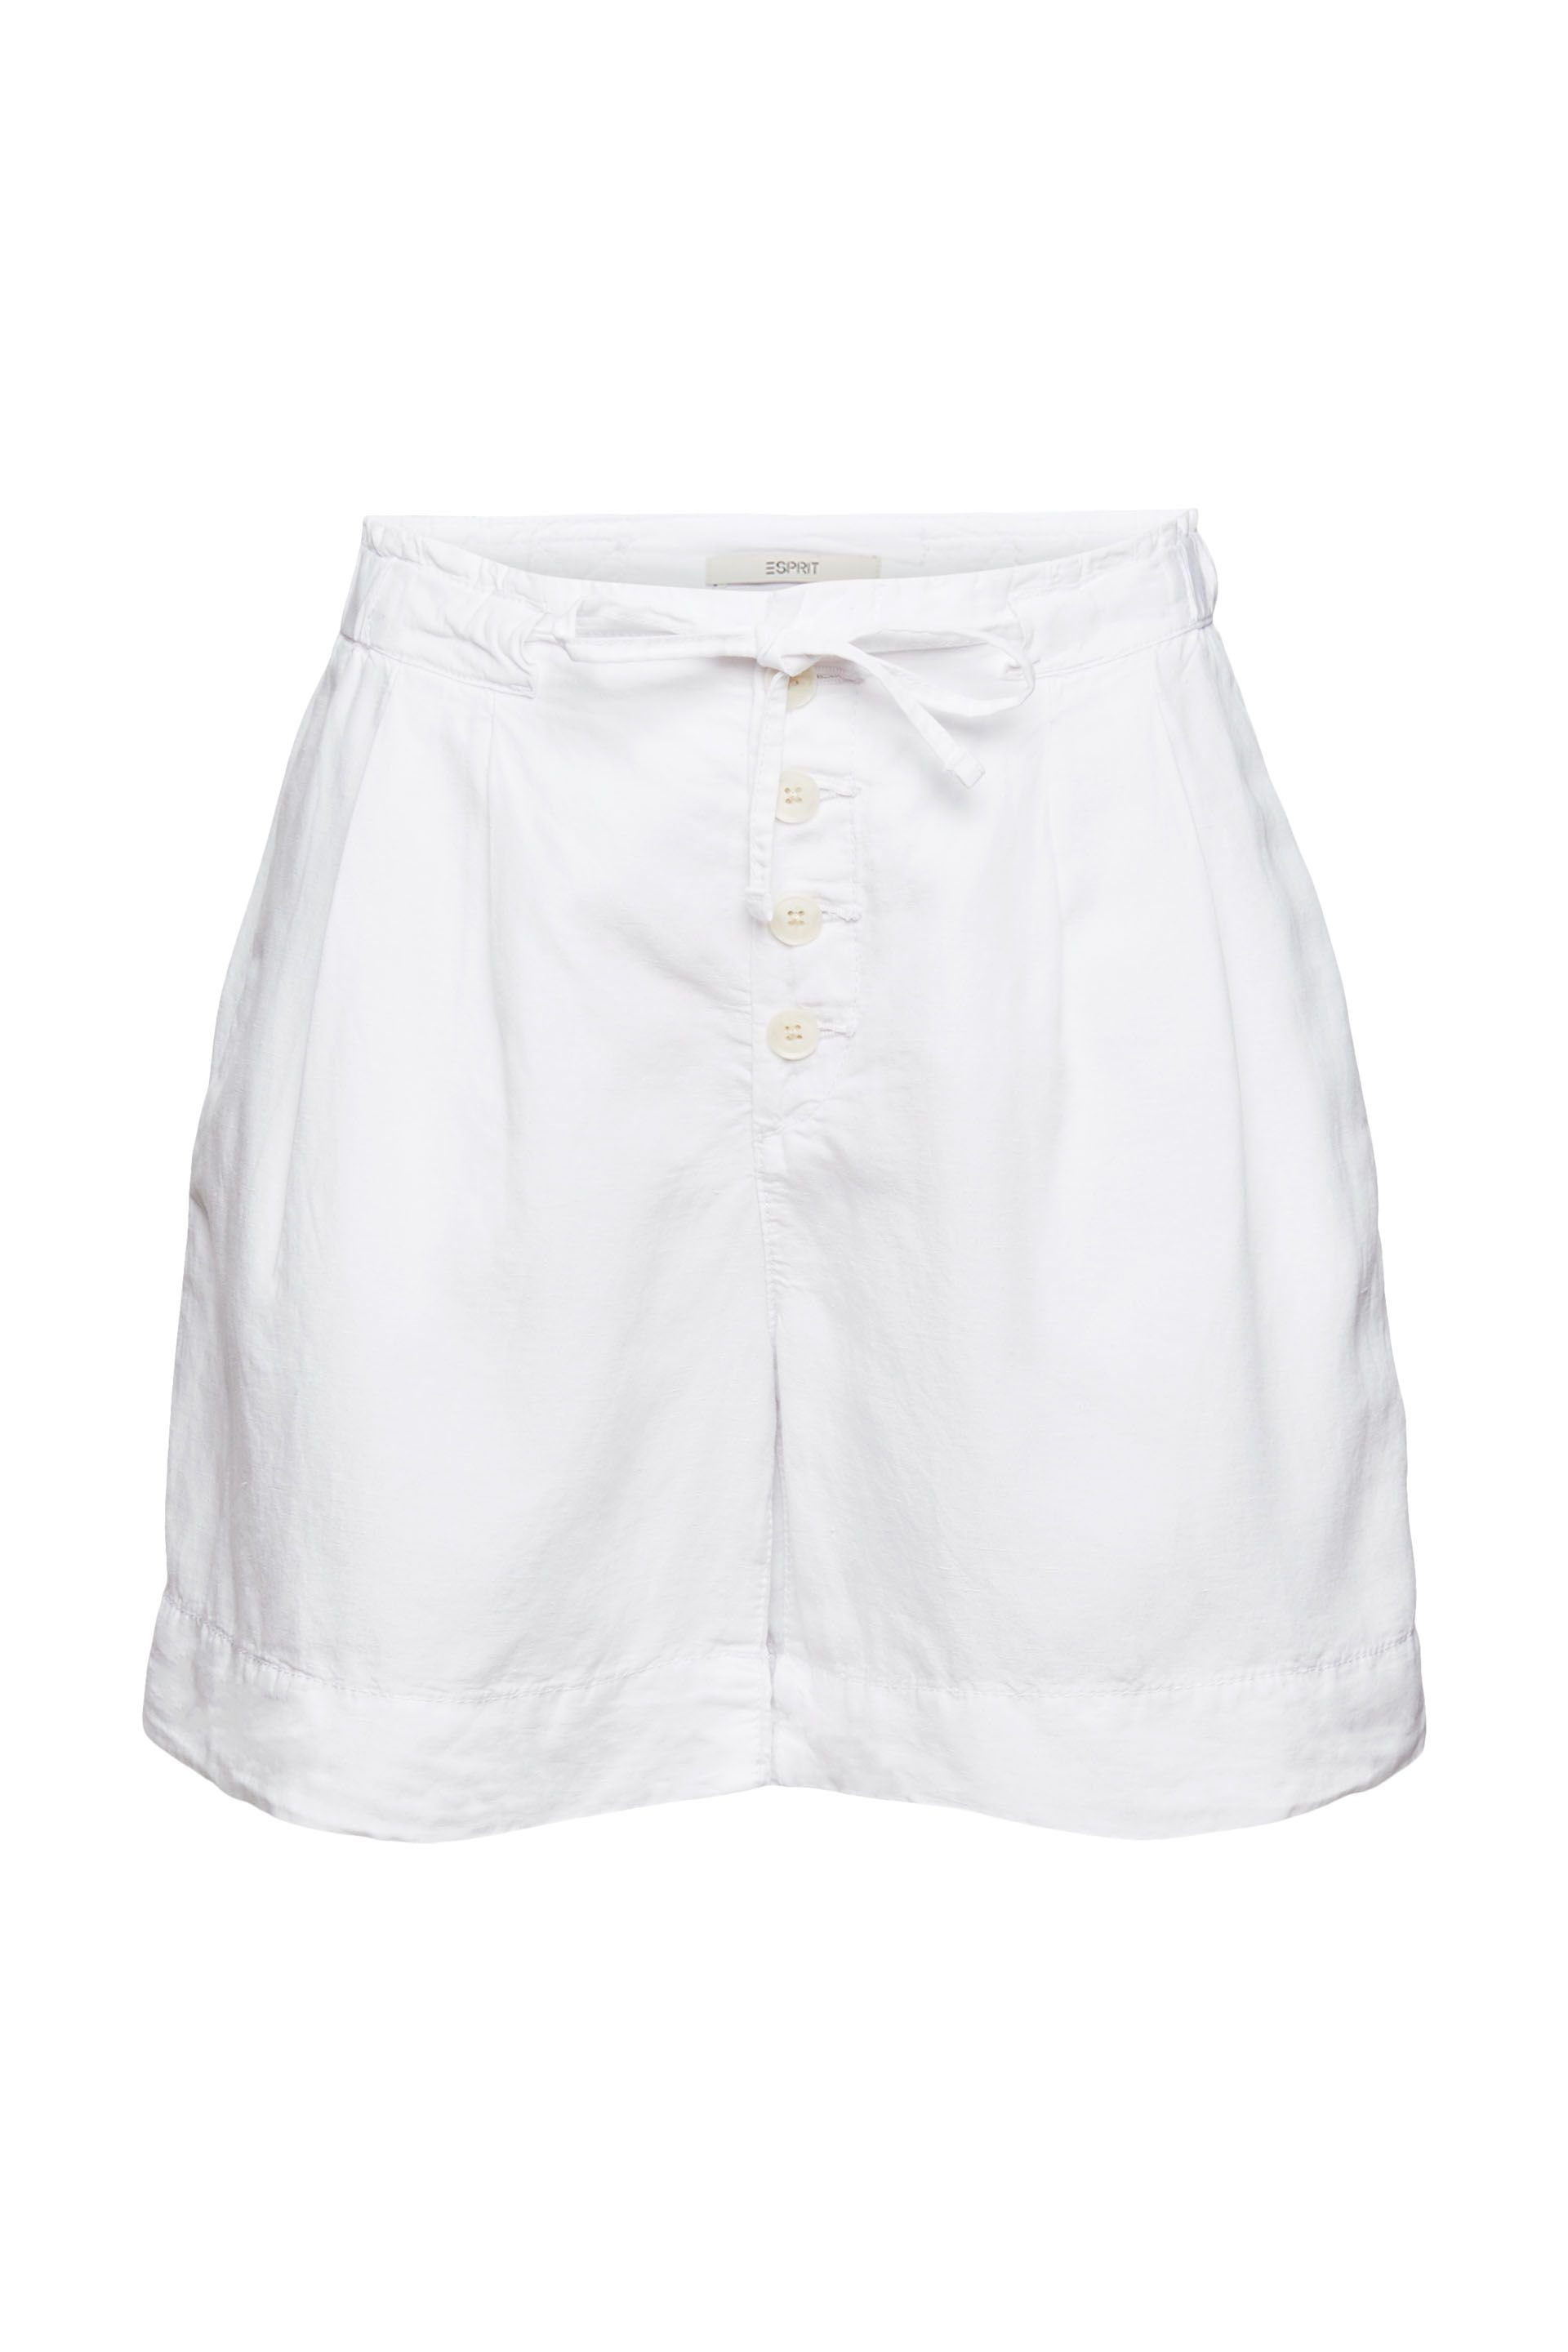 Esprit Shorts white | Shorts